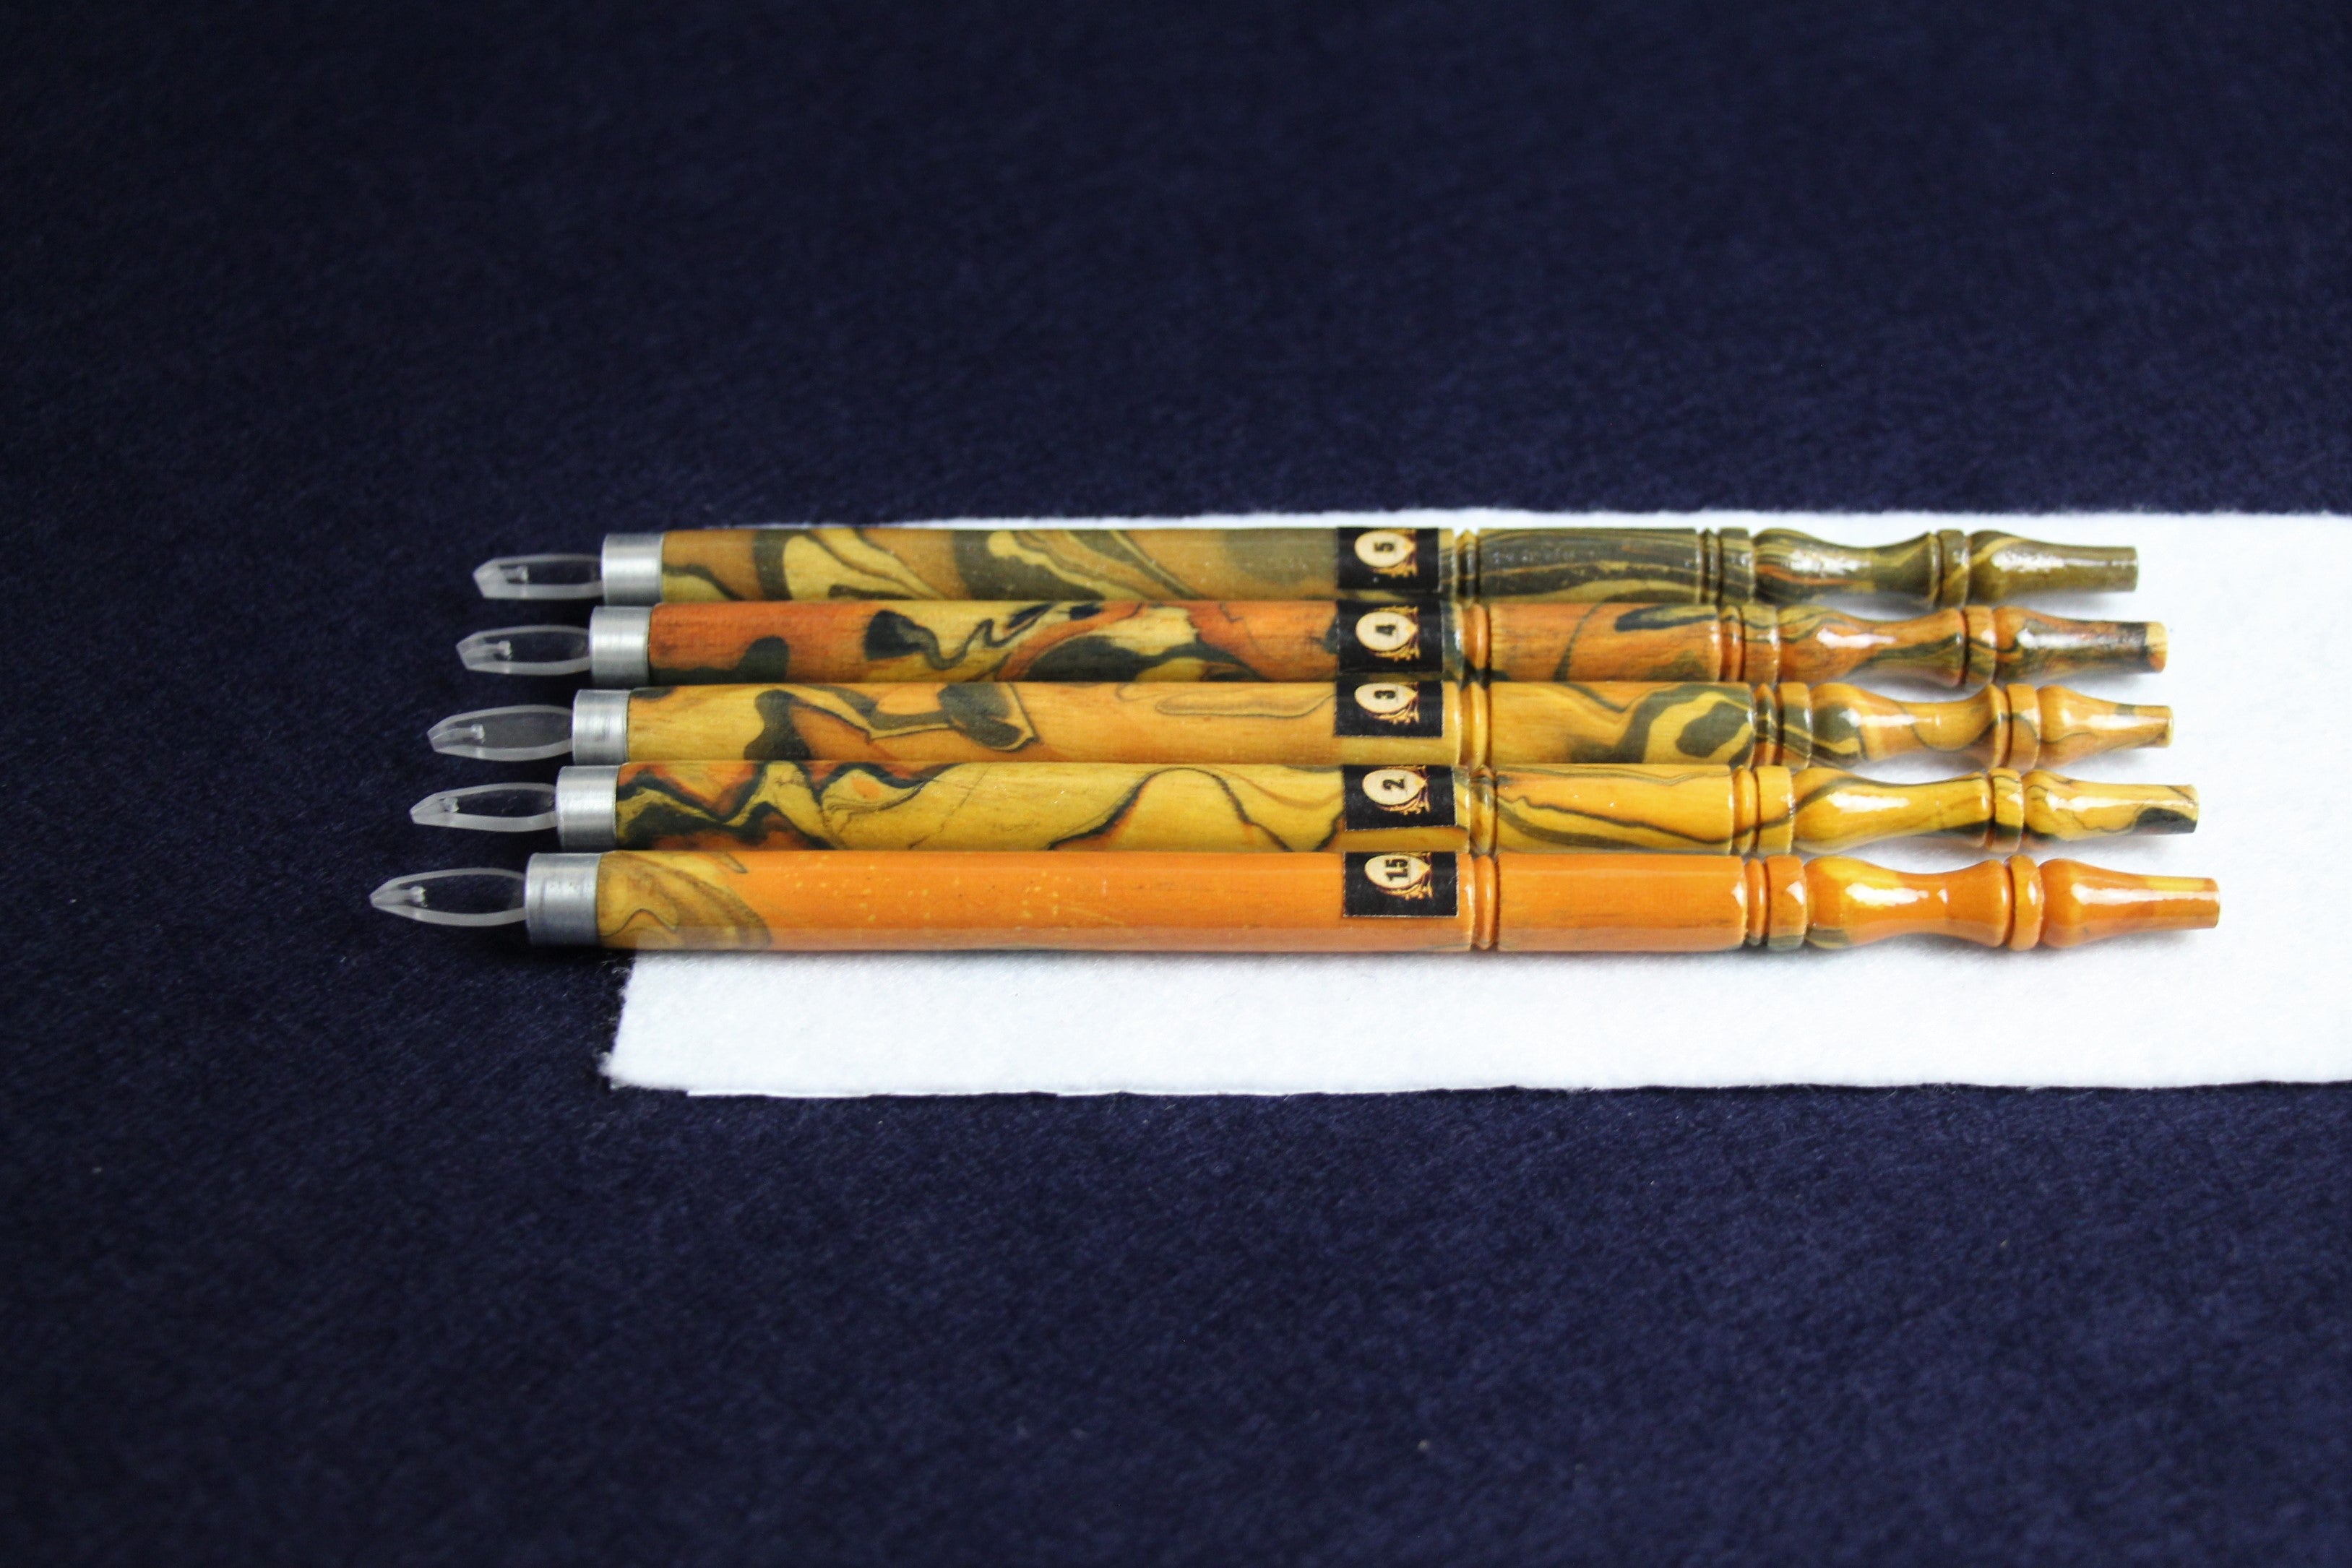 Set of 5 qalam pens with acrylic nib for Arabic calligraphy: 1.5 - 5 mm clear nib